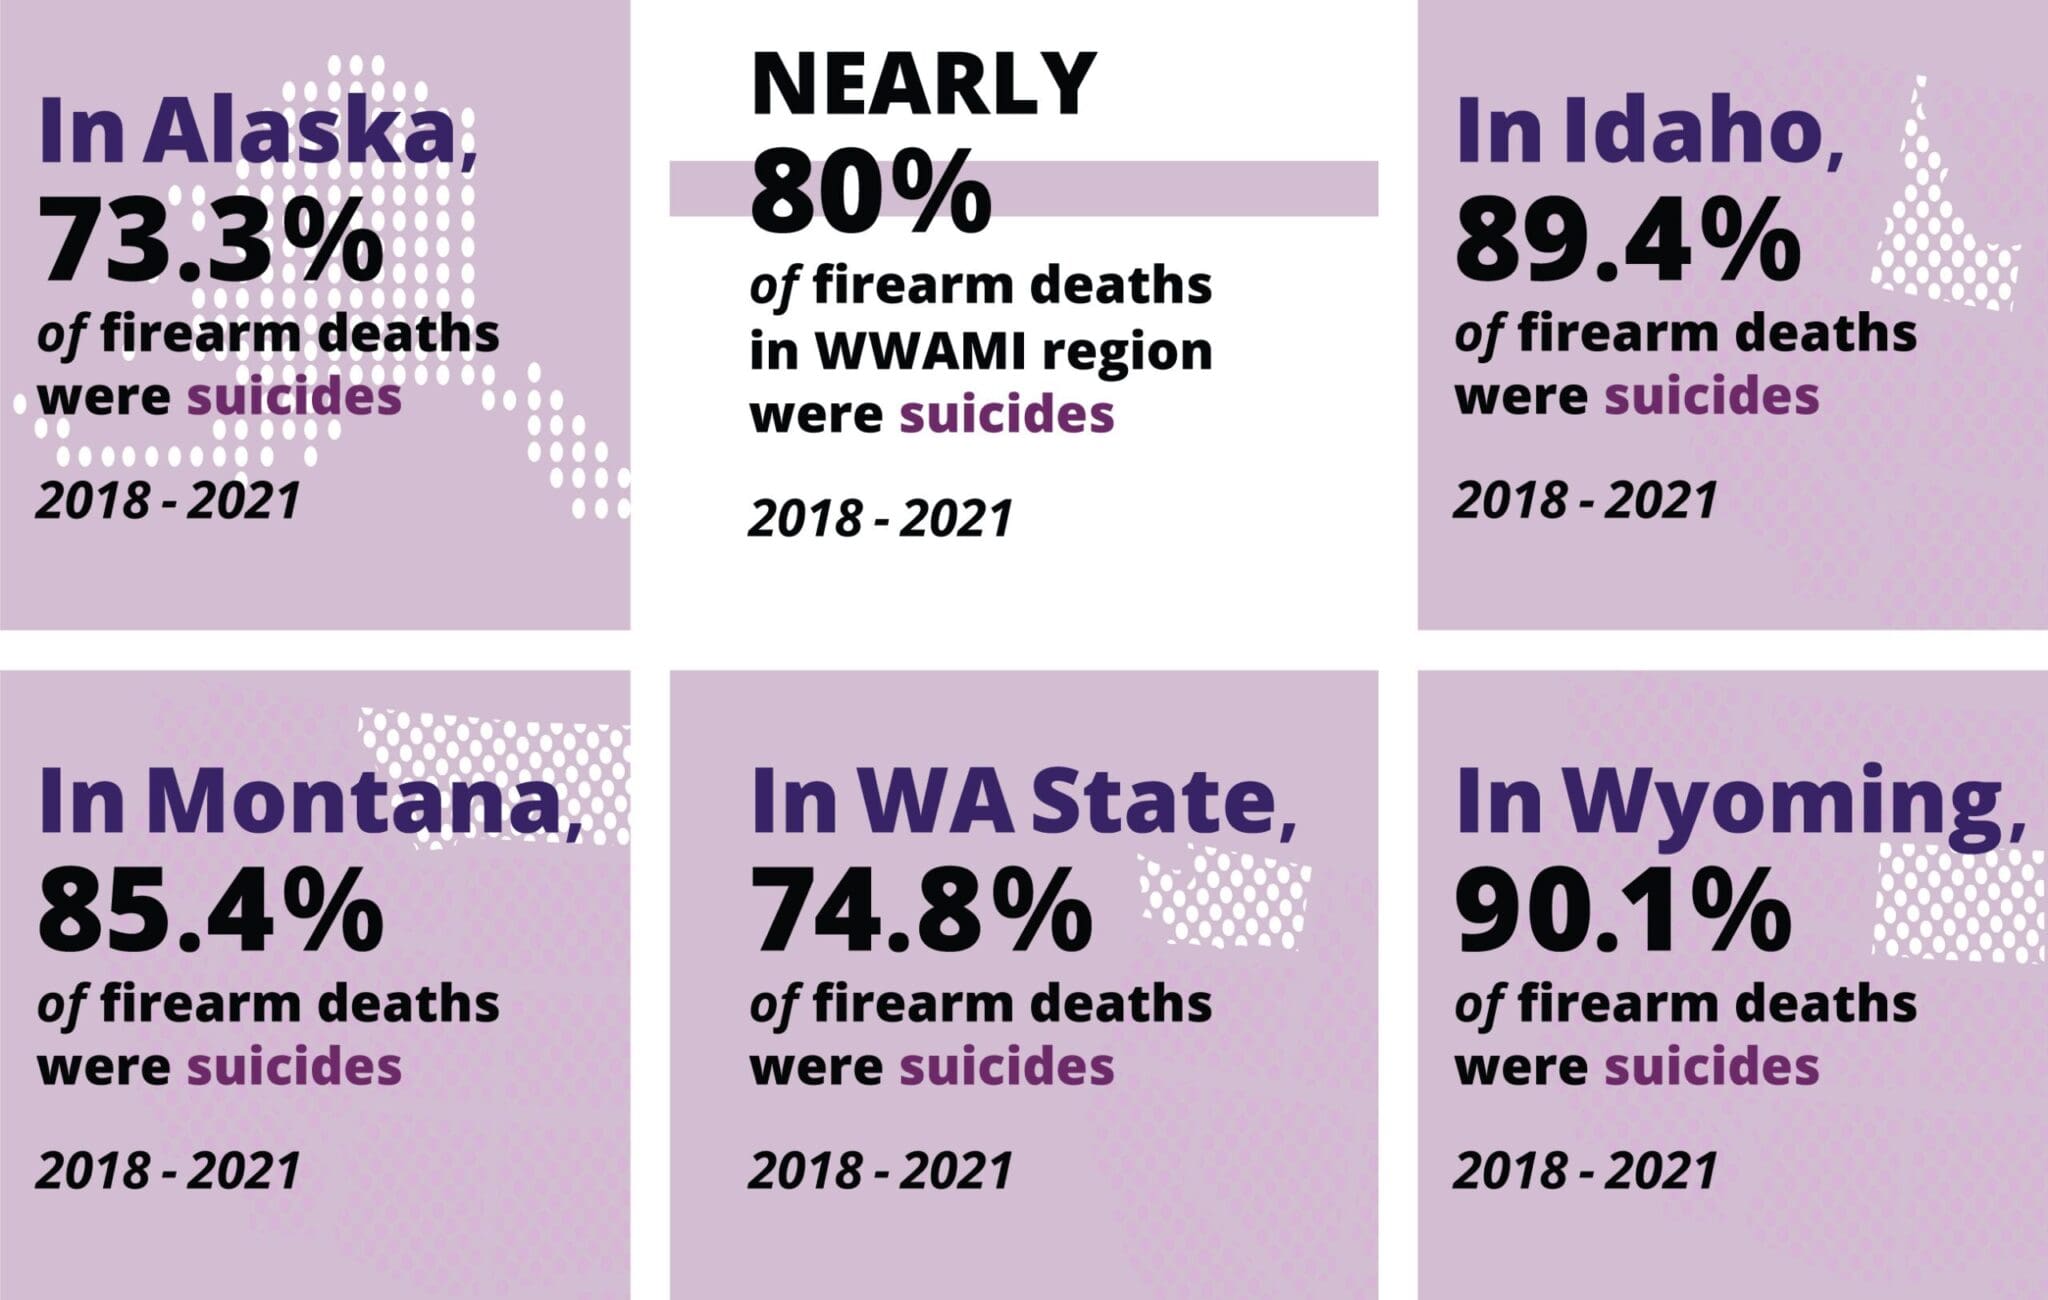 WWAMI Region FIREARM STATS: NEARLY 80% of ﬁrearm deaths in WWAMI region were suicides (2018-2021). Also displays a grid of six firearm statistics for WA, AK, WY, MO, ID. Source: CDC Wonder.